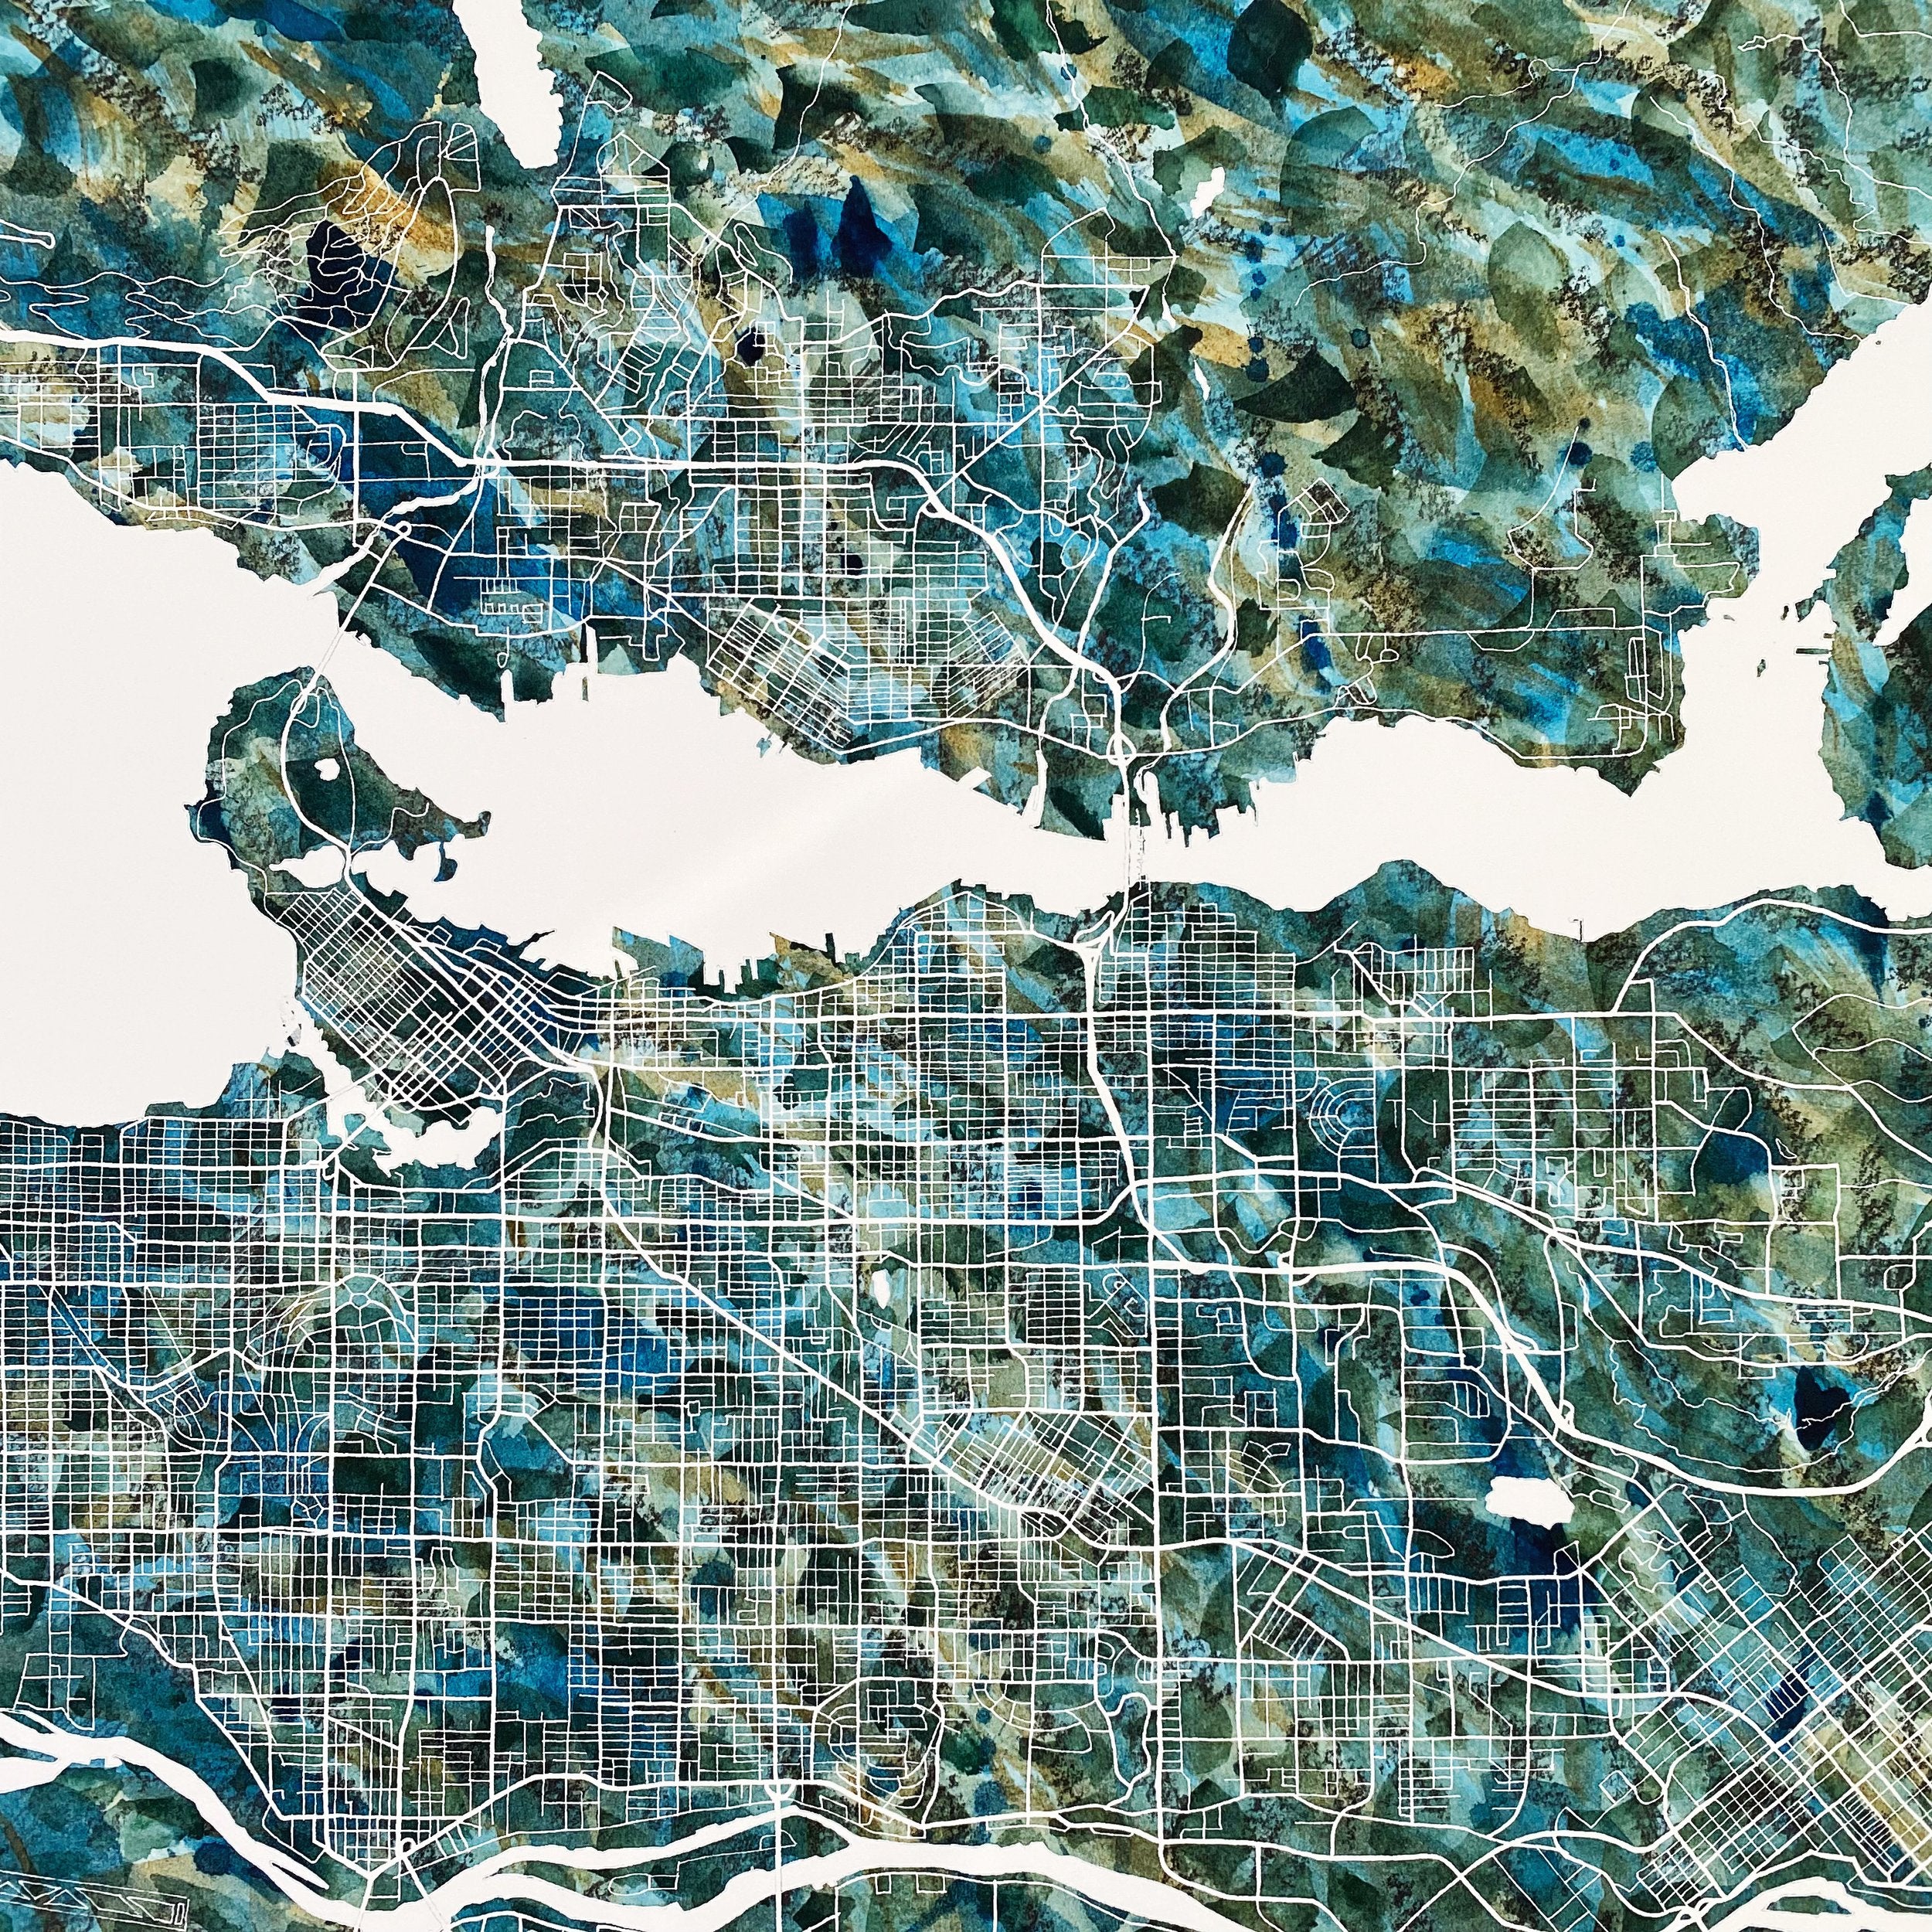 VANCOUVER BC Urban Fabrics City Map: PRINT